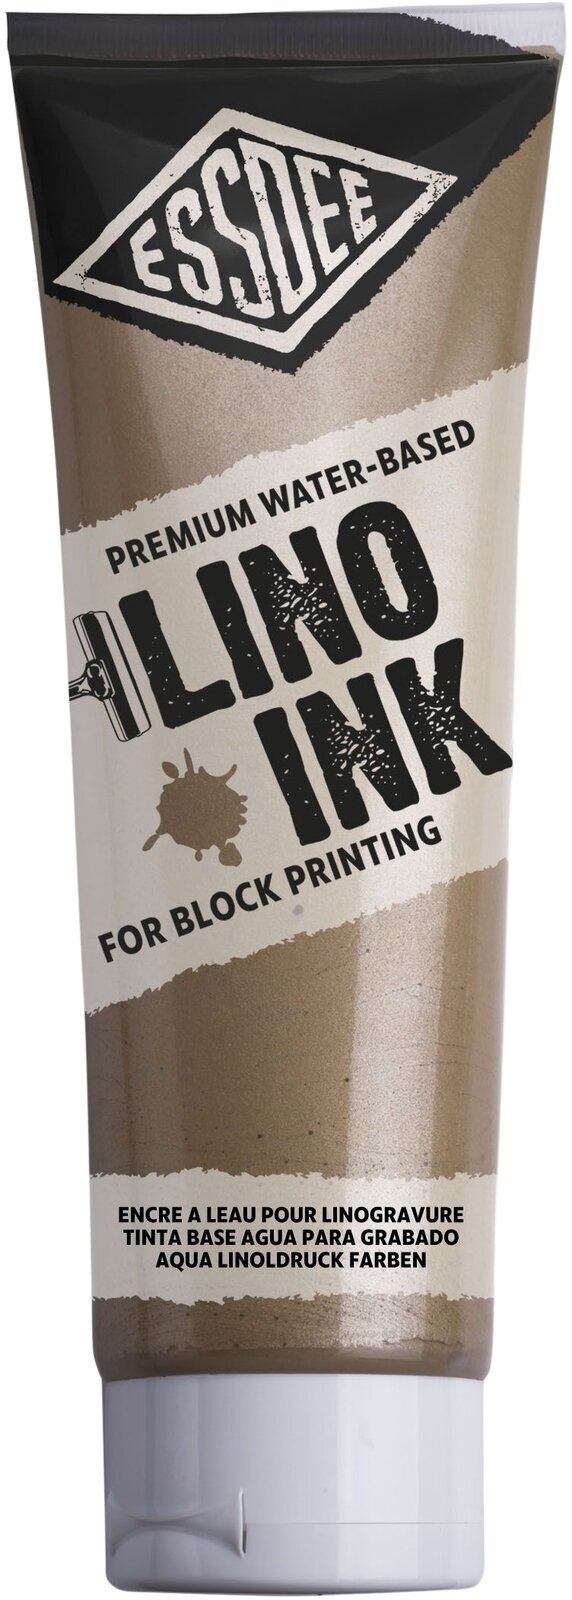 Paint For Linocut Essdee Block Printing Ink Paint For Linocut Metallic Gold 300 ml